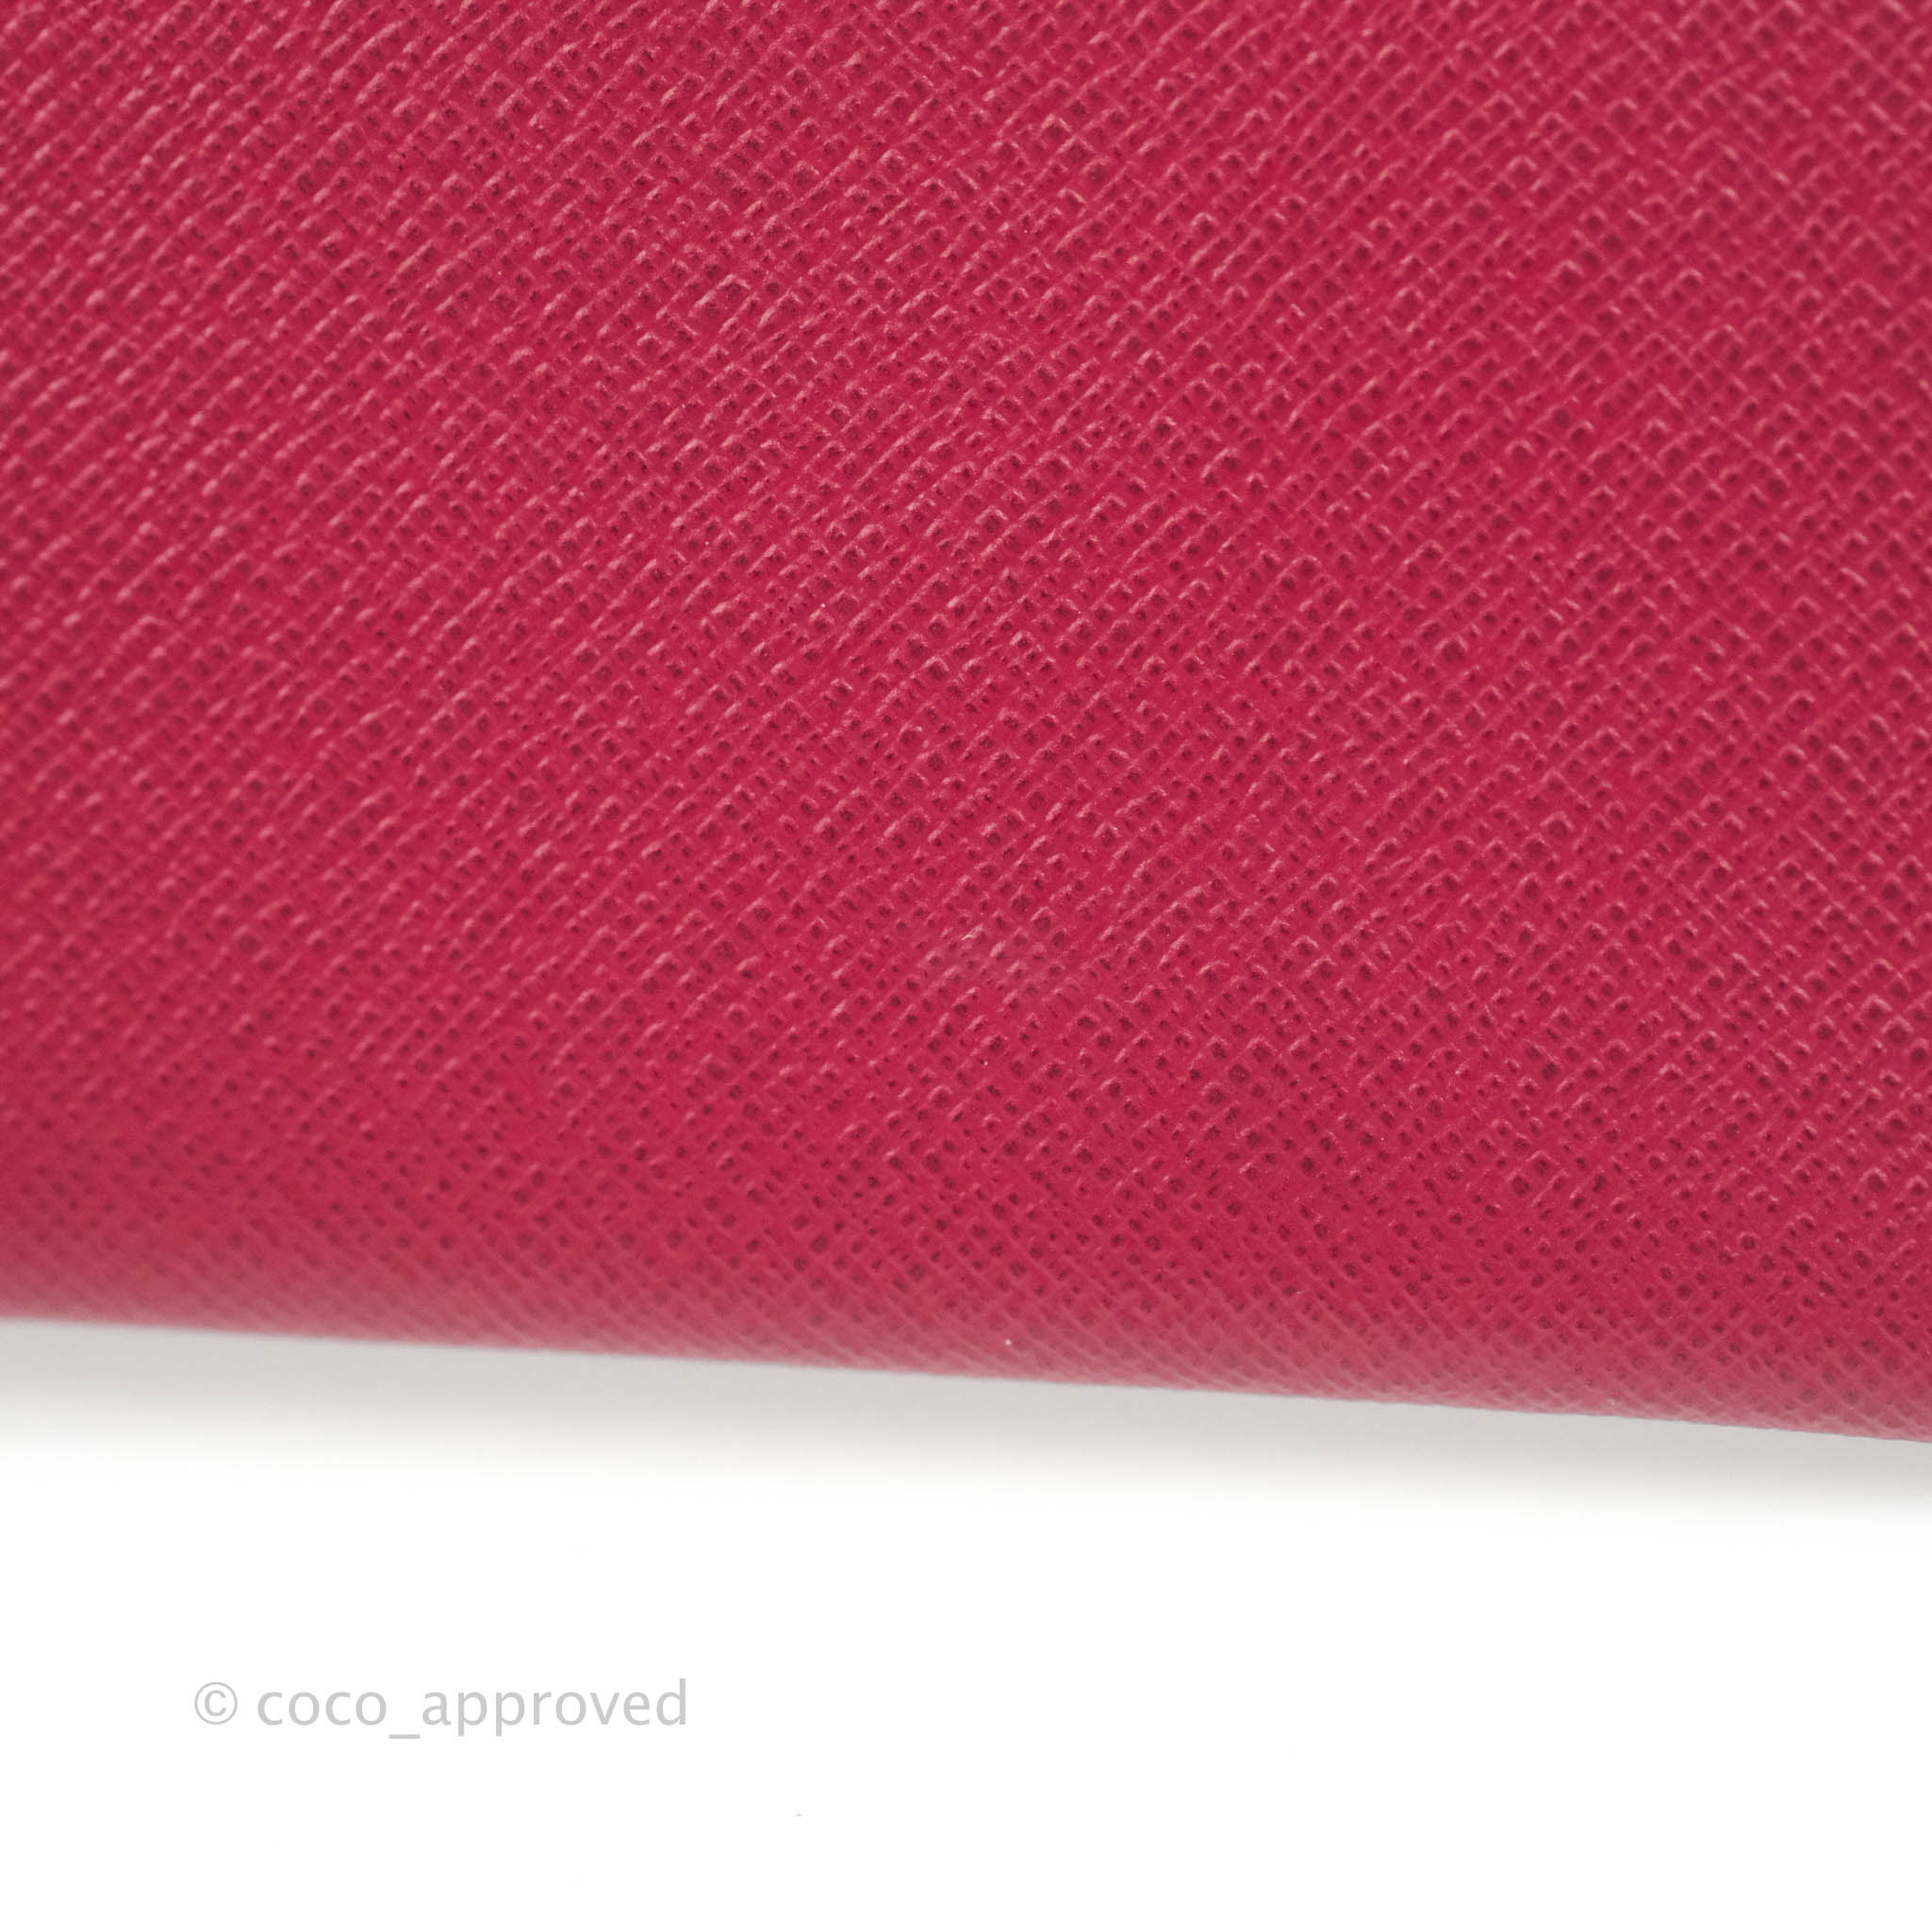 Louis Vuitton F√âLICIE Pochette, Pink, One Size